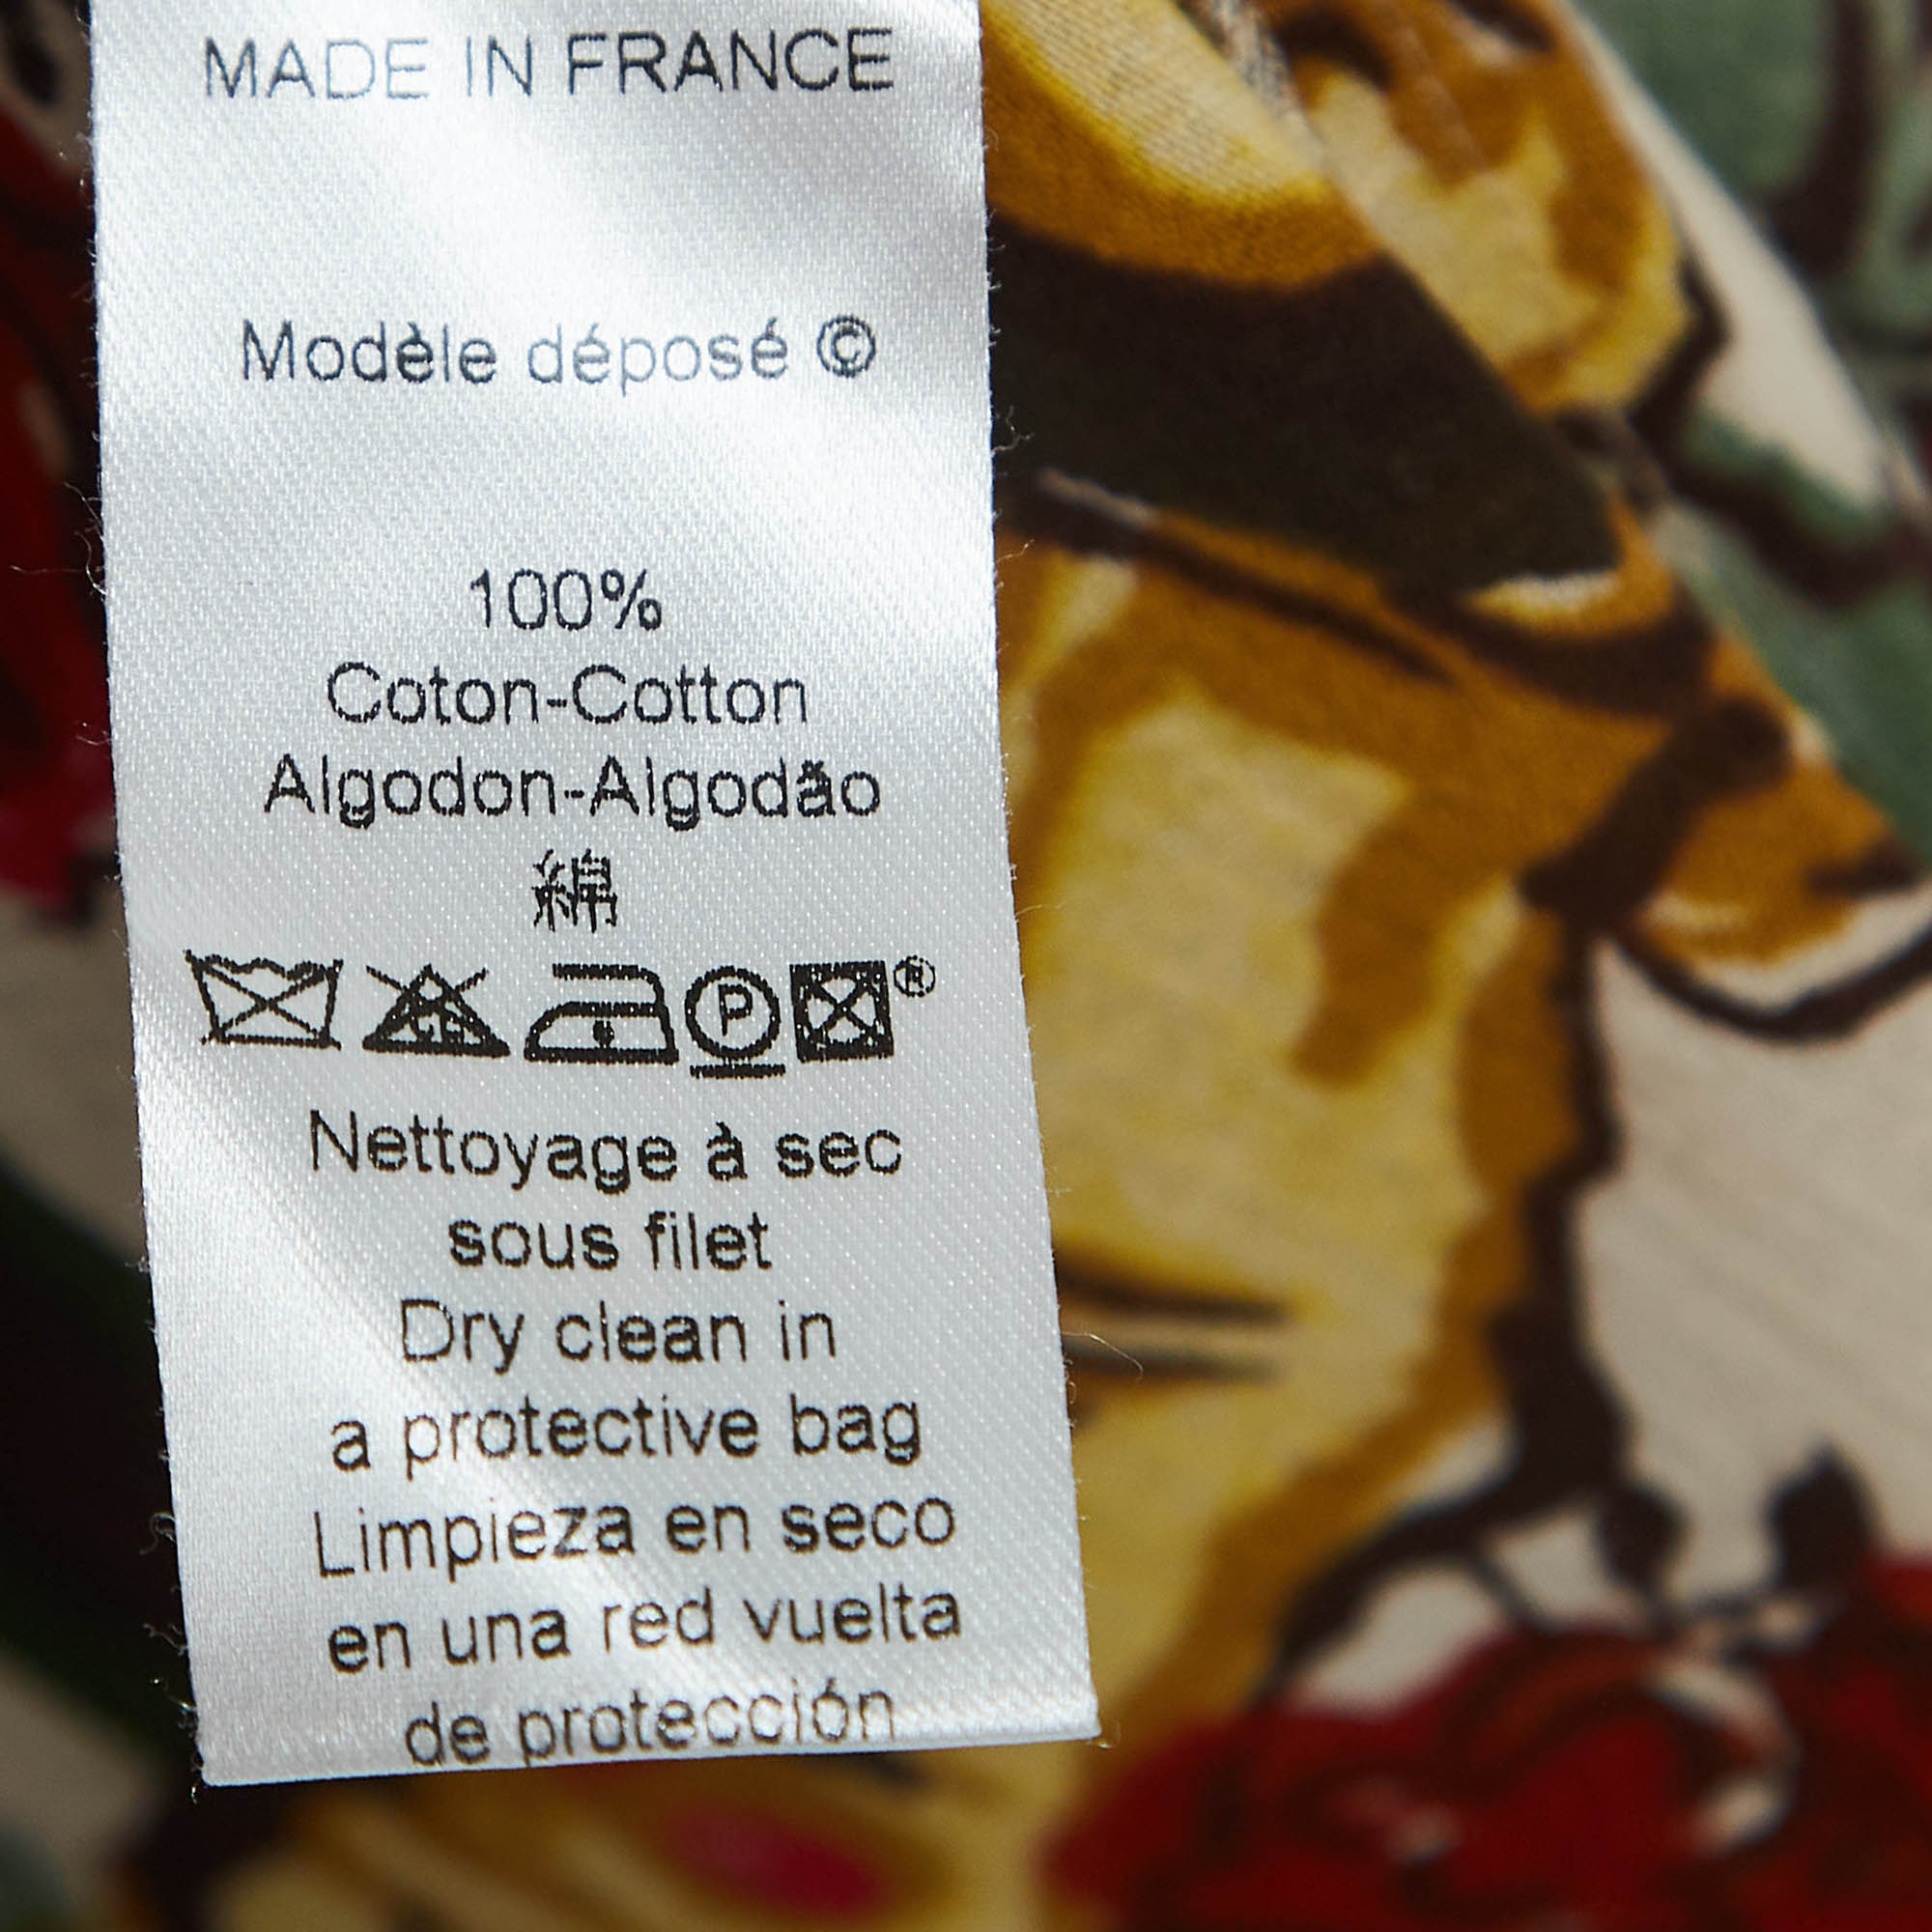 Kenzo Multicolor Floral Print Cotton Strappy Asymmetrical Dress M